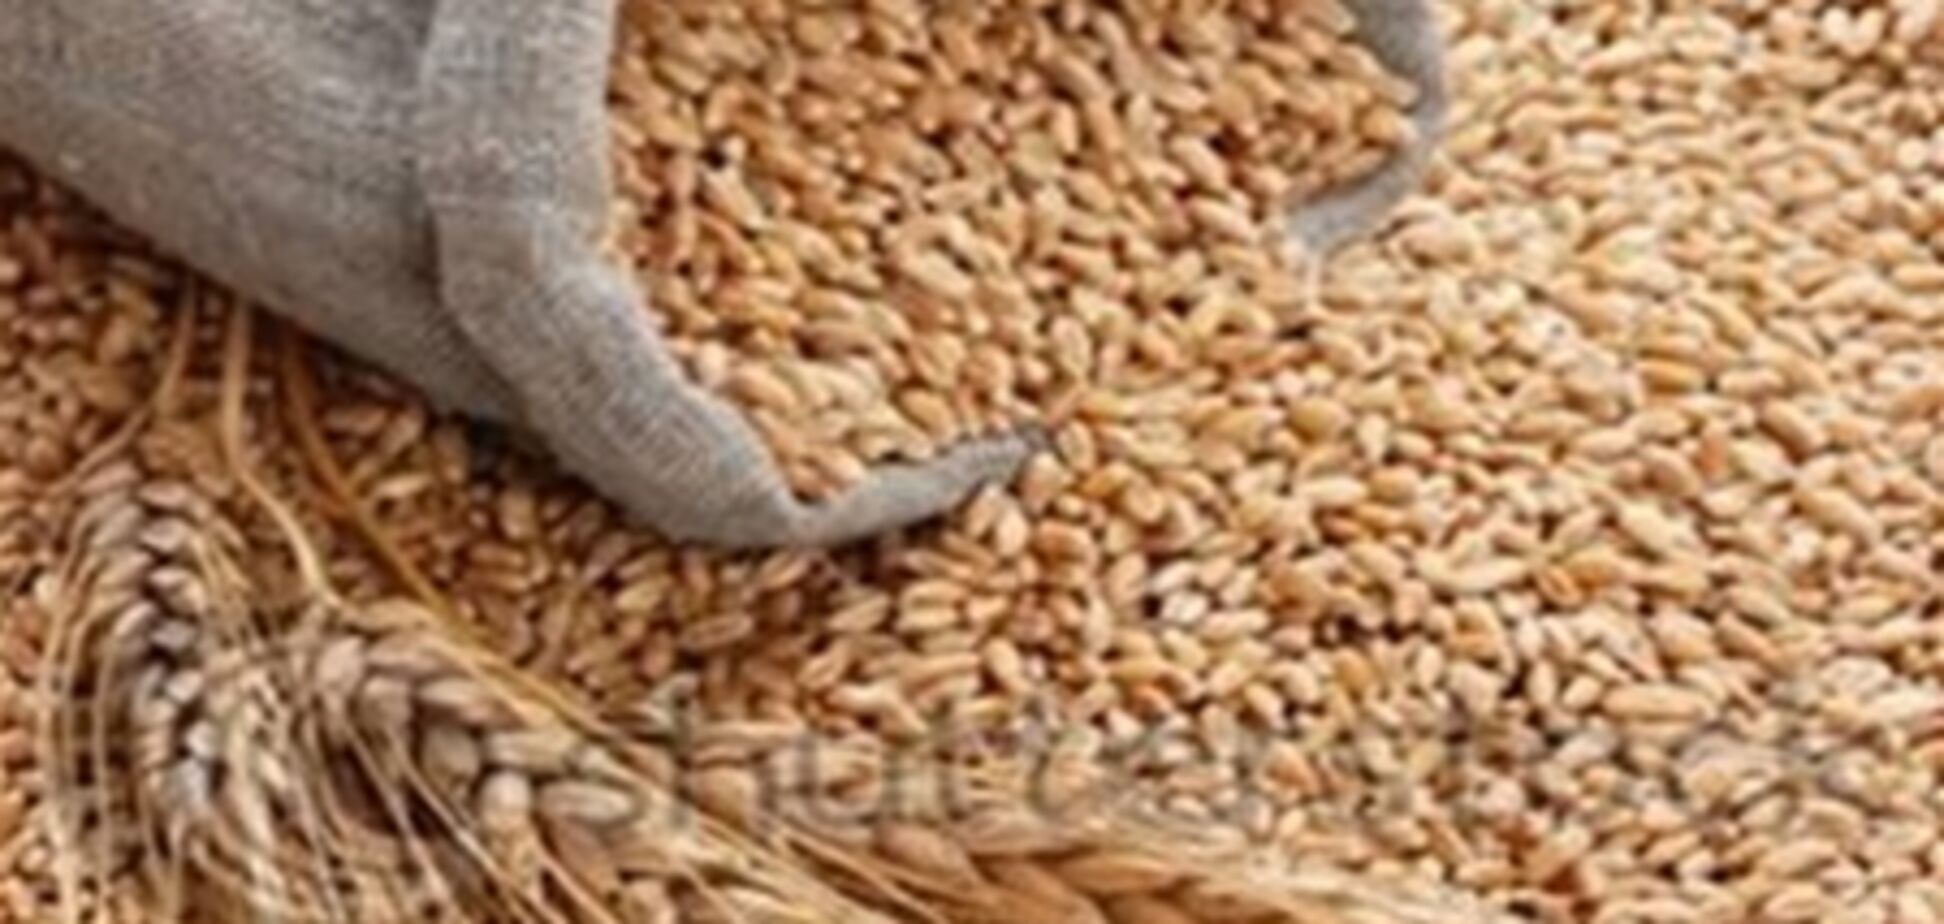 В Черновицкой области милиционер украл 5 тонн зерна